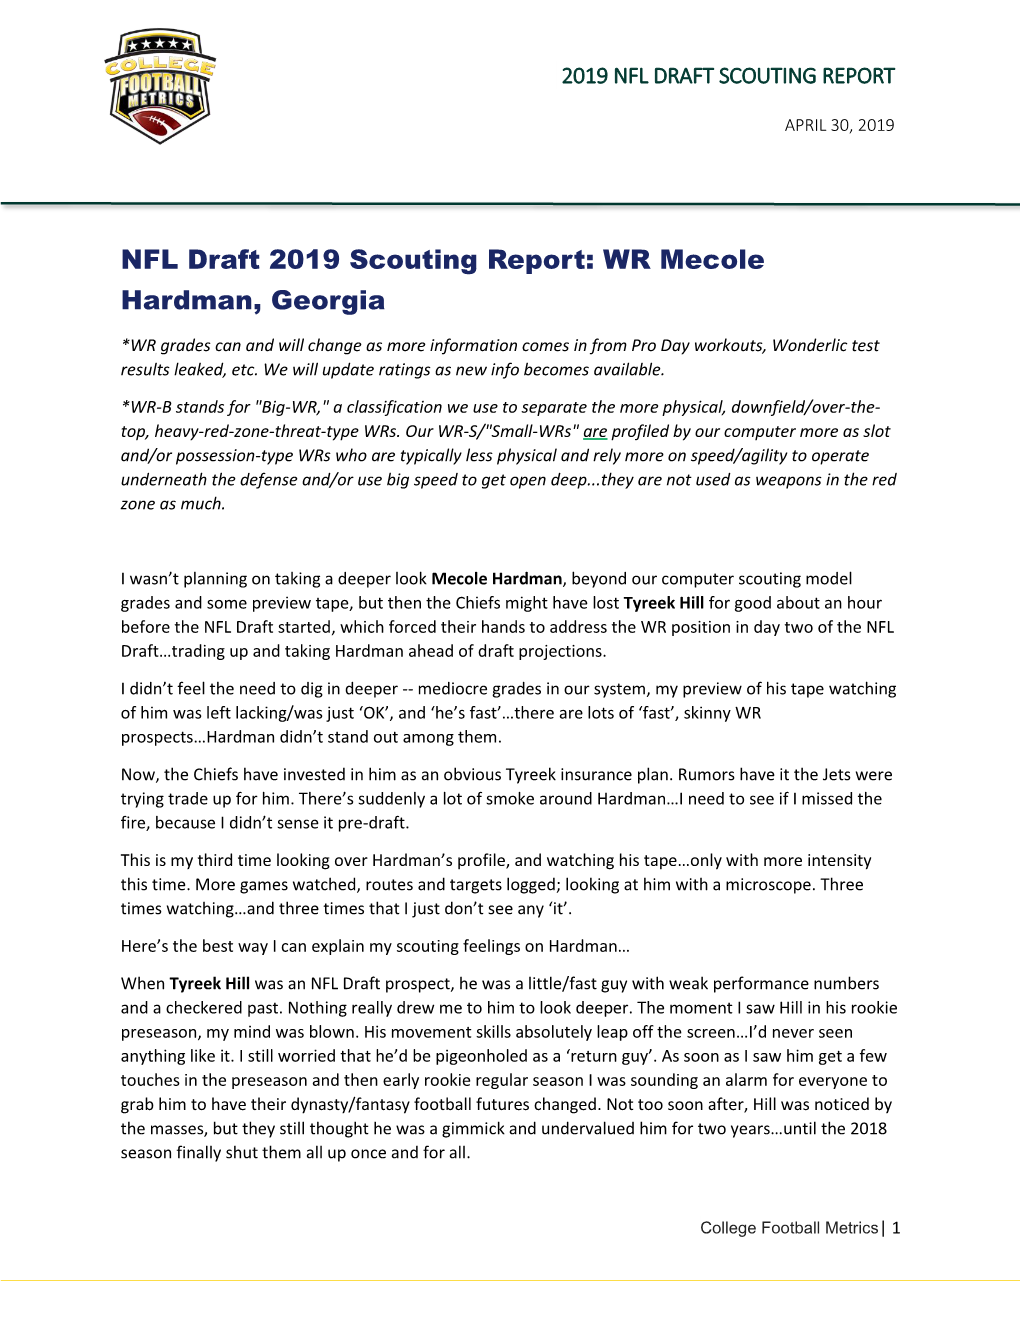 NFL Draft 2019 Scouting Report: WR Mecole Hardman, Georgia